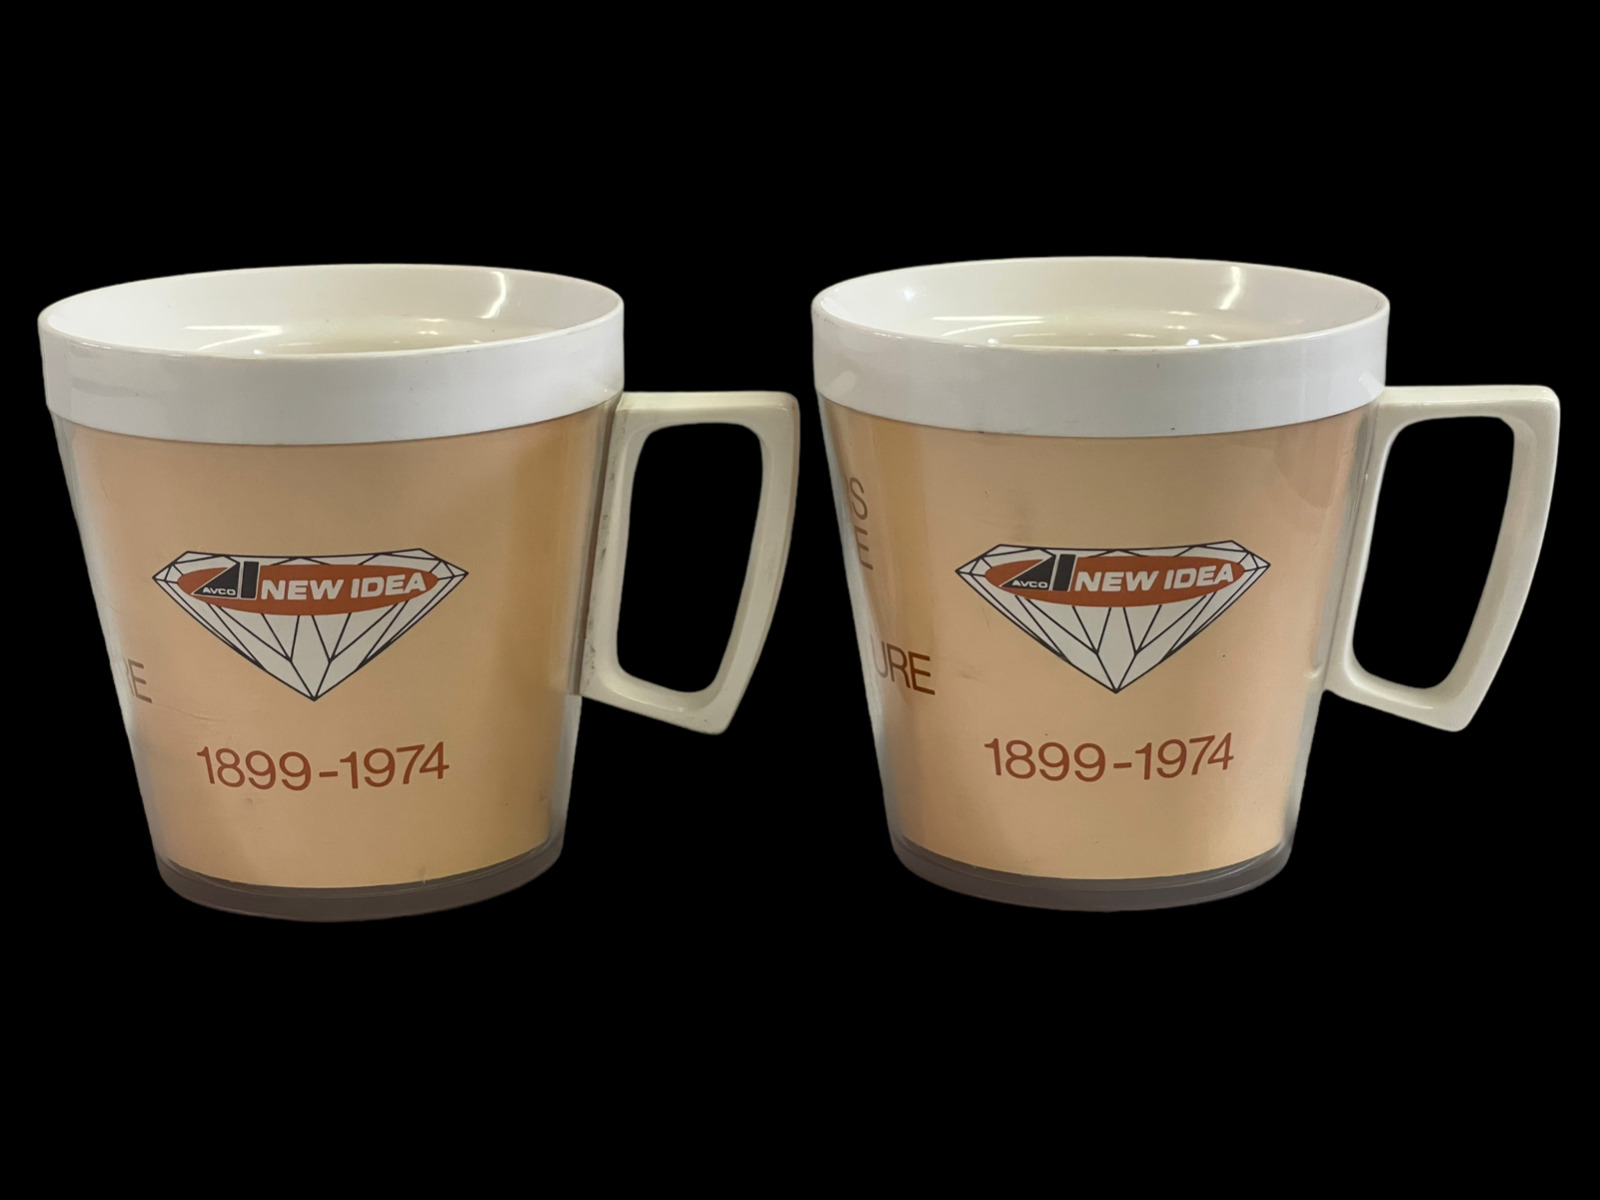 Set of 2 NEW IDEA Farm Tractor Insulated Coffee Mugs Cups Flambeau AVCO 8oz